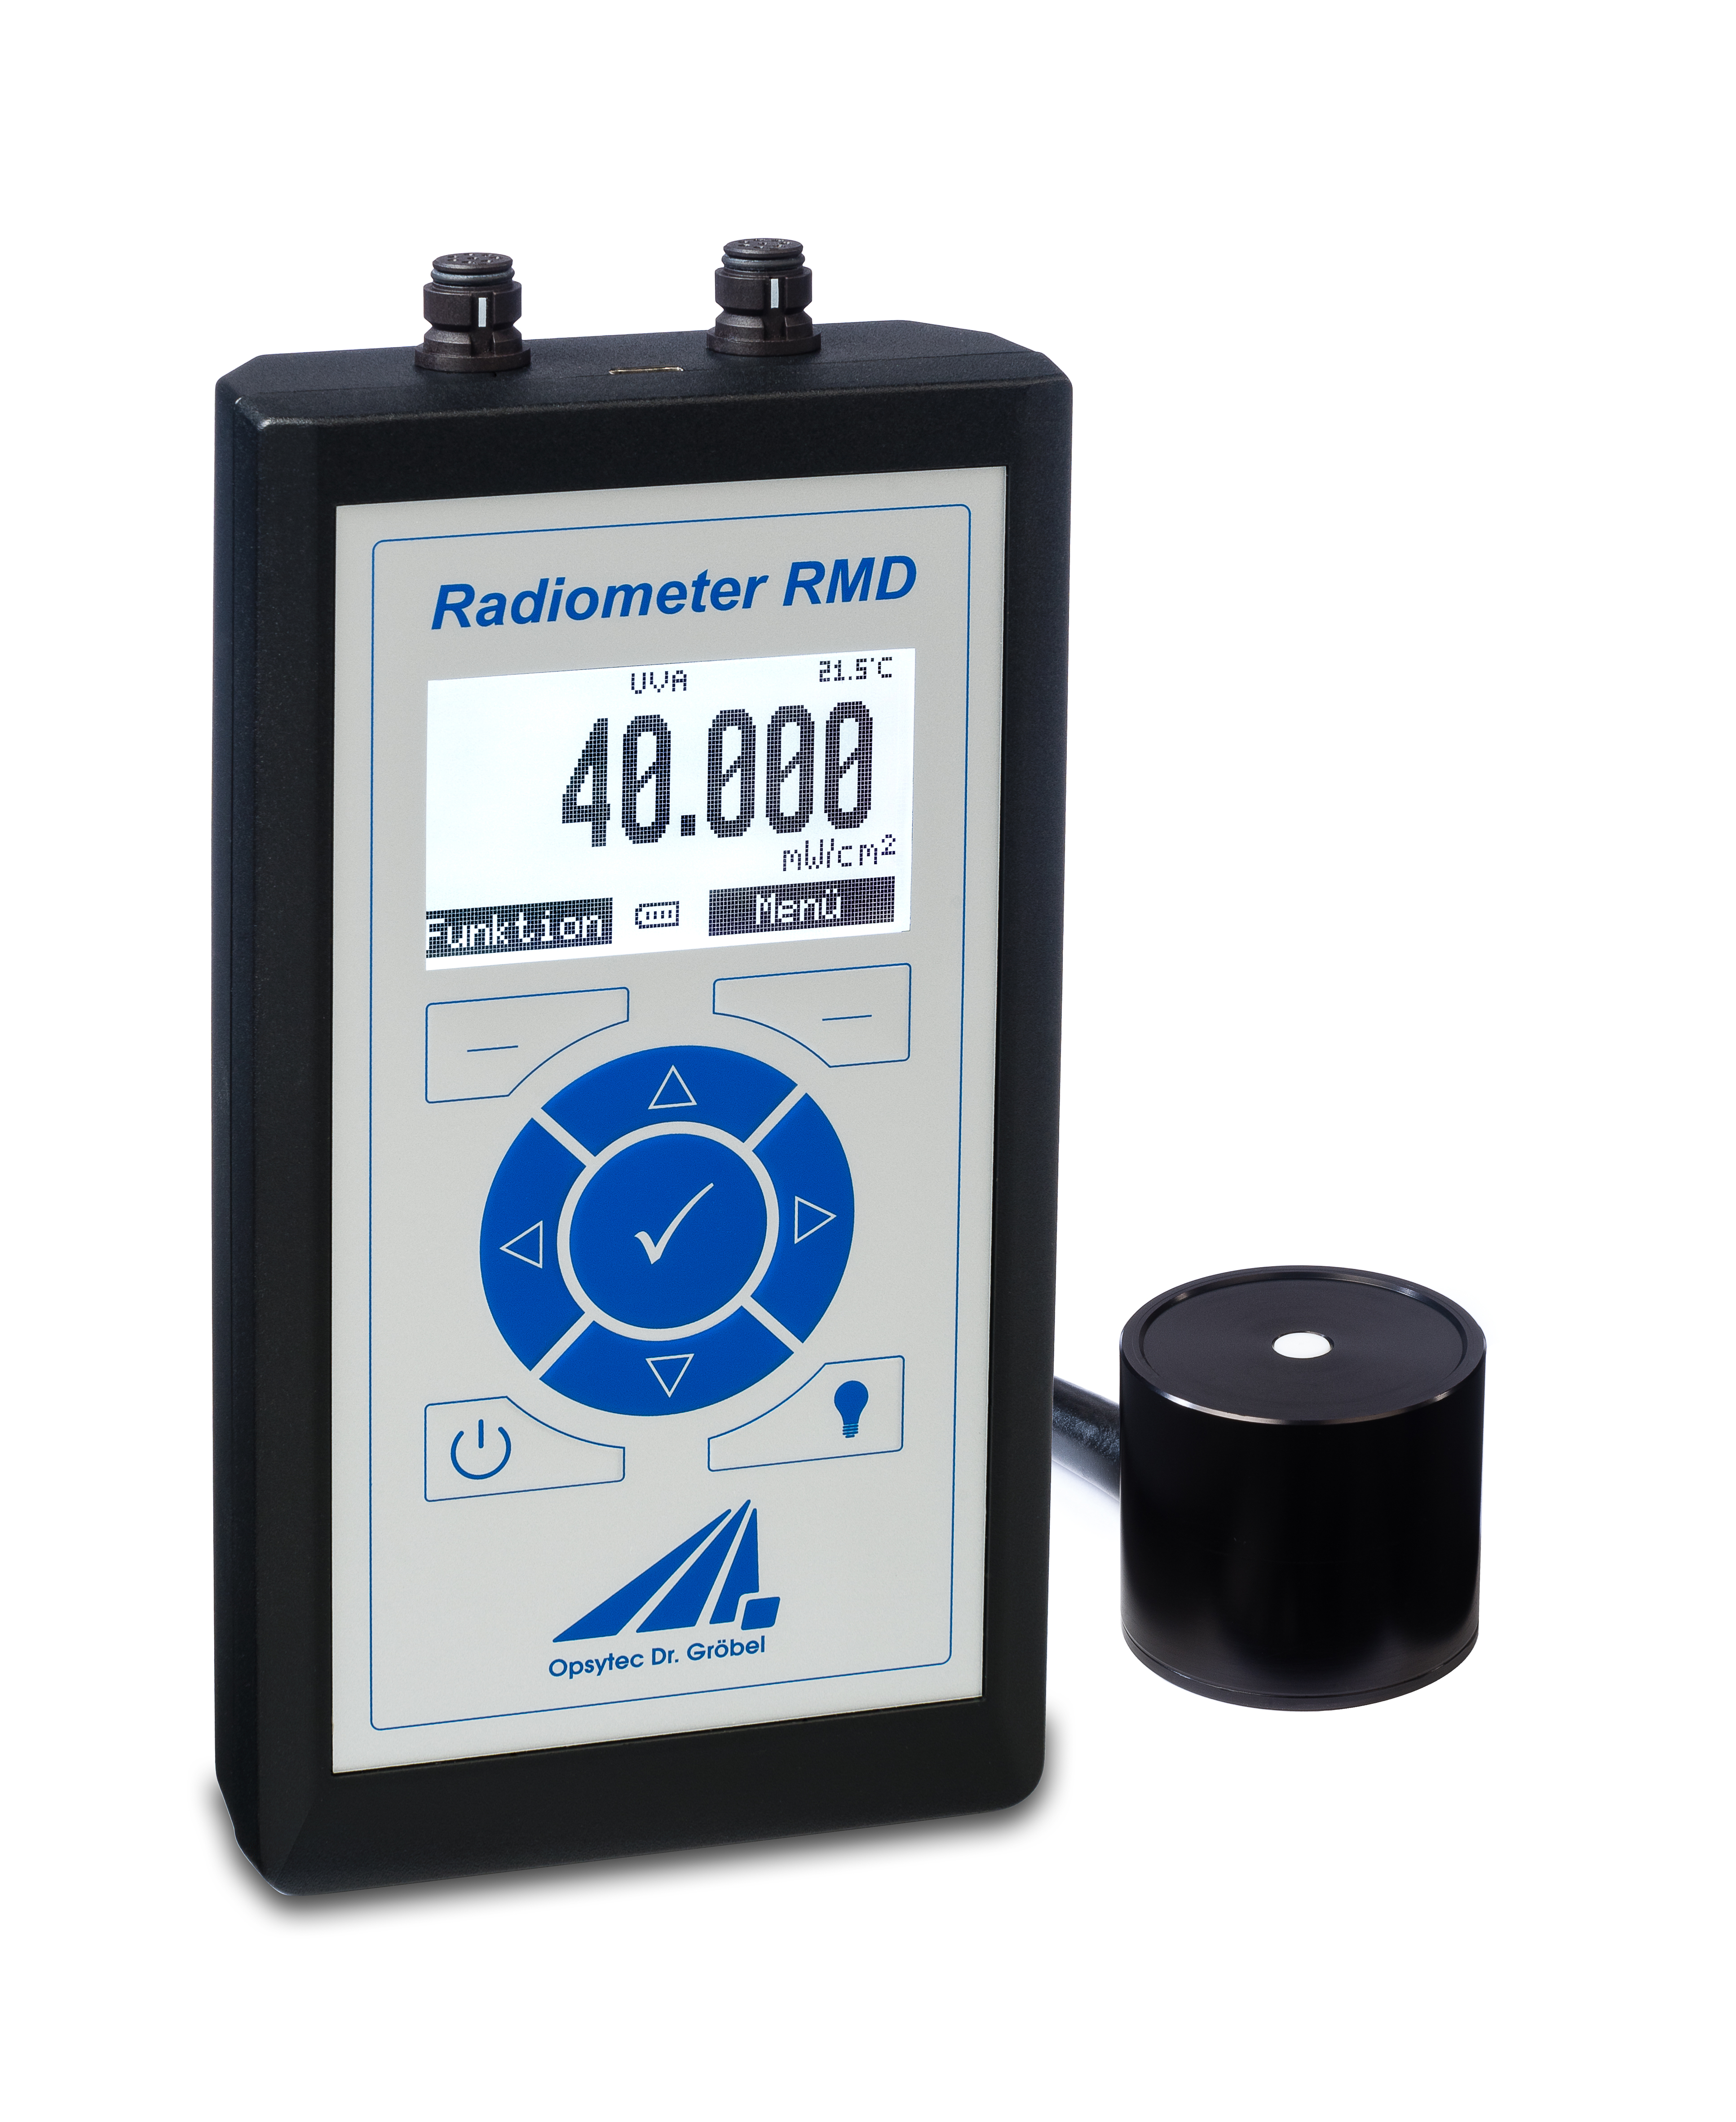 Digital radiometer RMD with one sensor